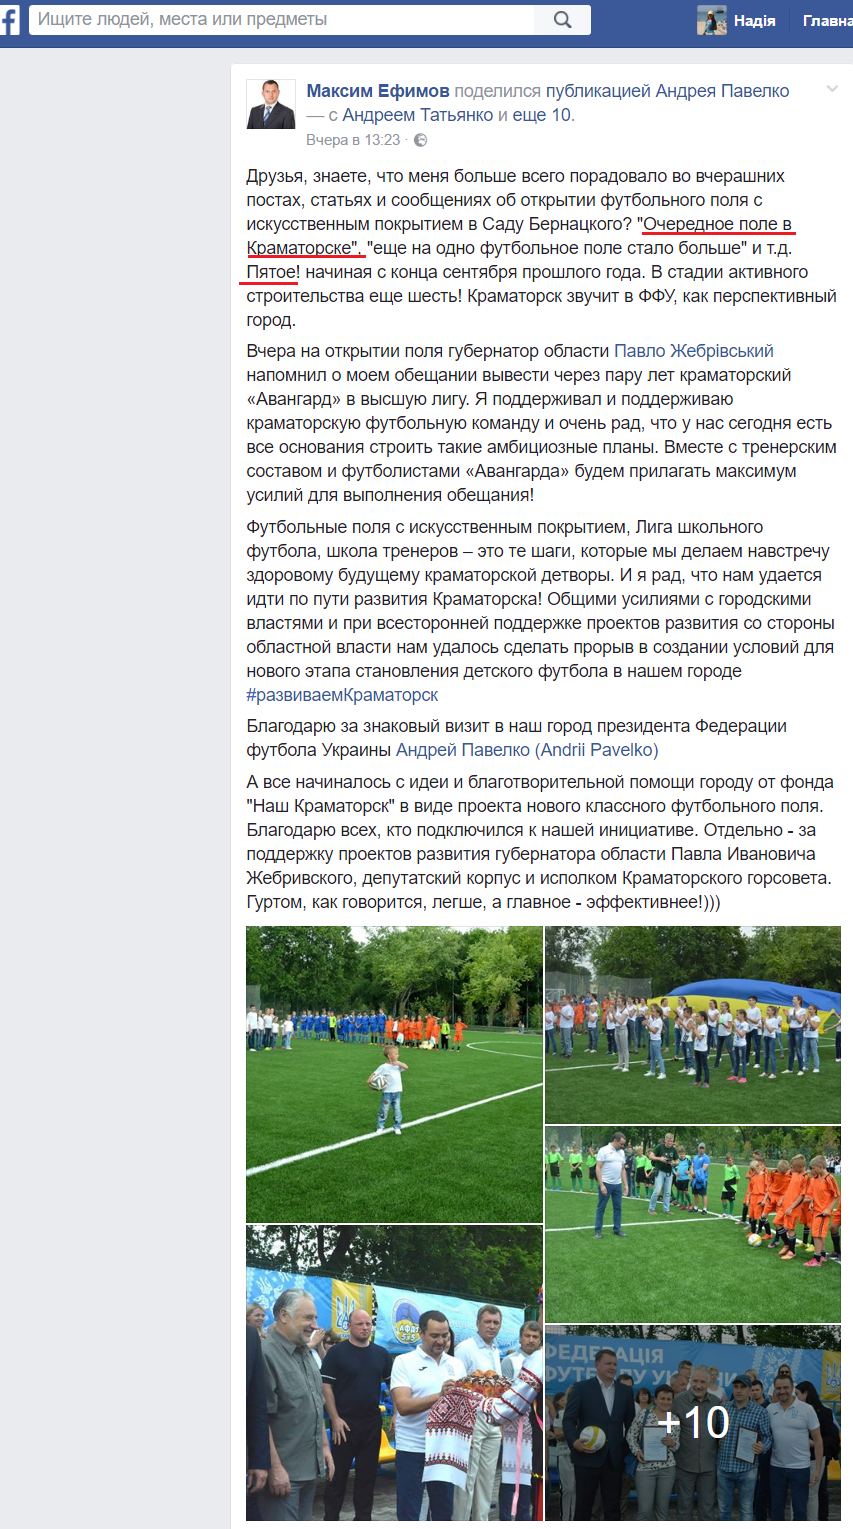 https://www.facebook.com/maxim.viktorovich.efimov/posts/1946748092237703?pnref=story